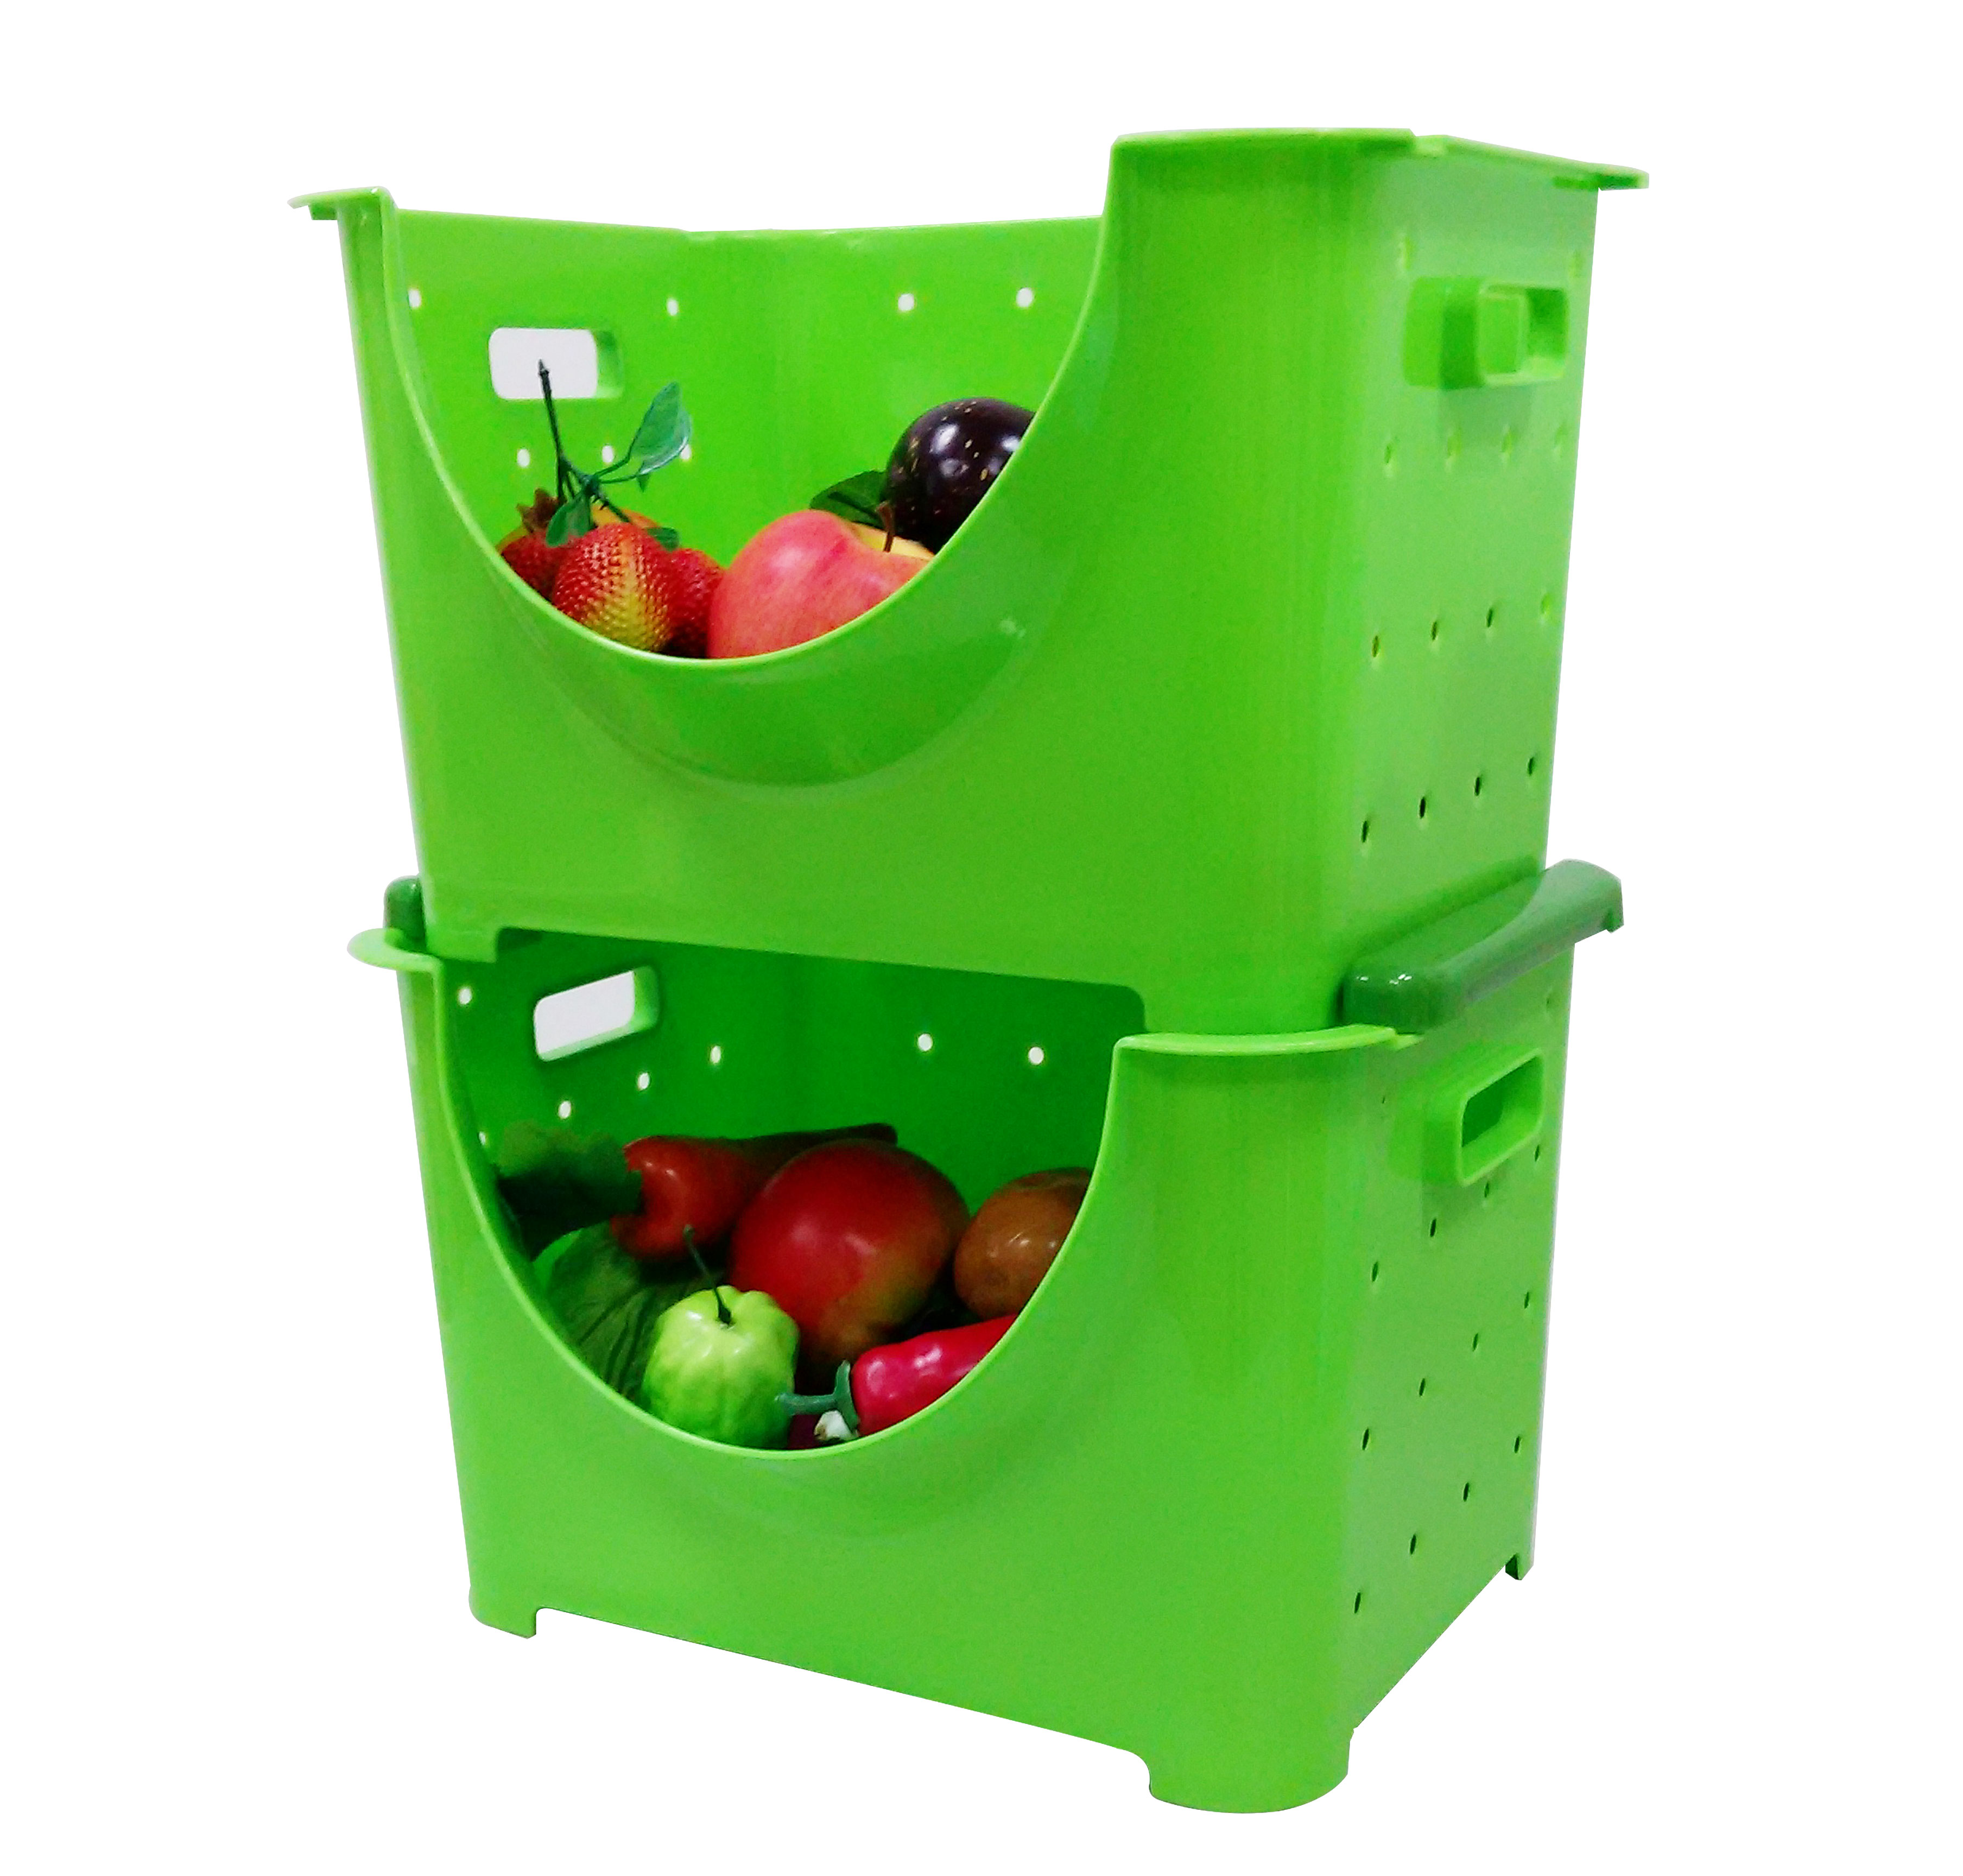   Fruit Vegetables Books Toys Clothing Multi-Function Plastic Storage Basket